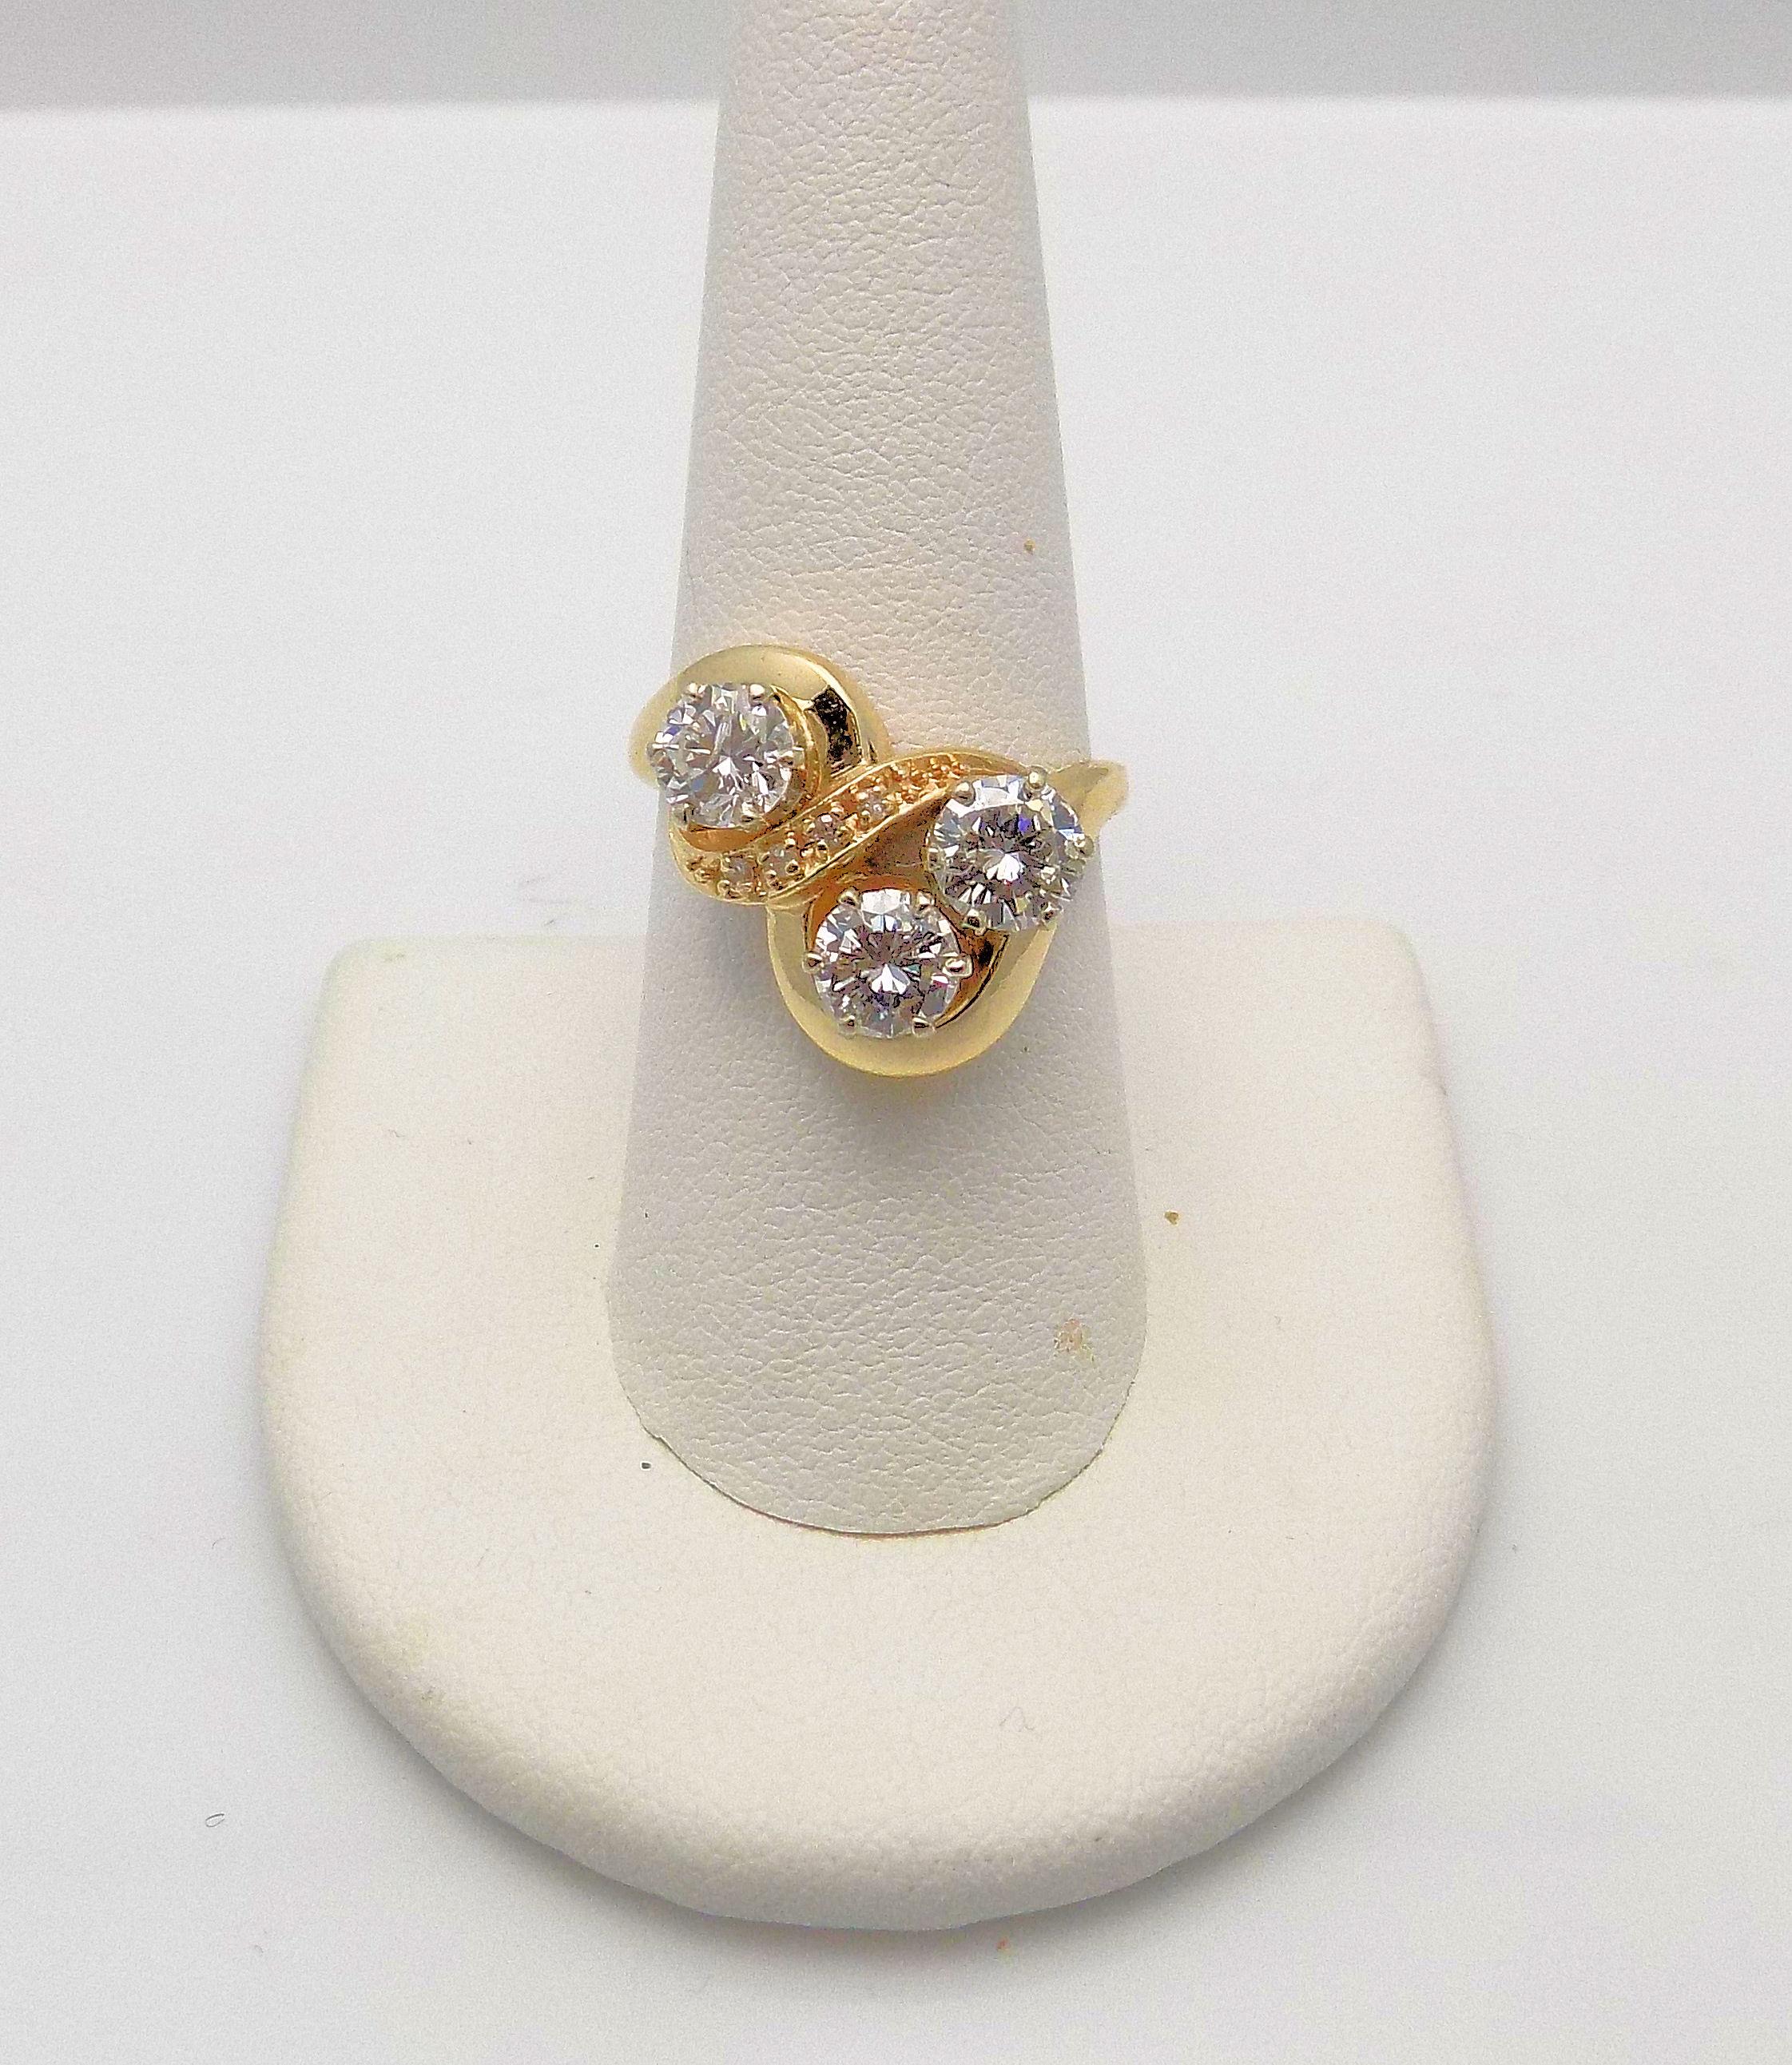 Fabulous 14 Karat Yellow Gold Swirl Motif Ring Featuring 3 Round Brilliant Diamonds 1.75 Carat Total Weight, 4 Single Cut Diamonds 0.05 Carat Total Weight, S1-I1, H-I; Ring Size/Finger Size 8.5; 3.5 DWT or 5.44 Grams.